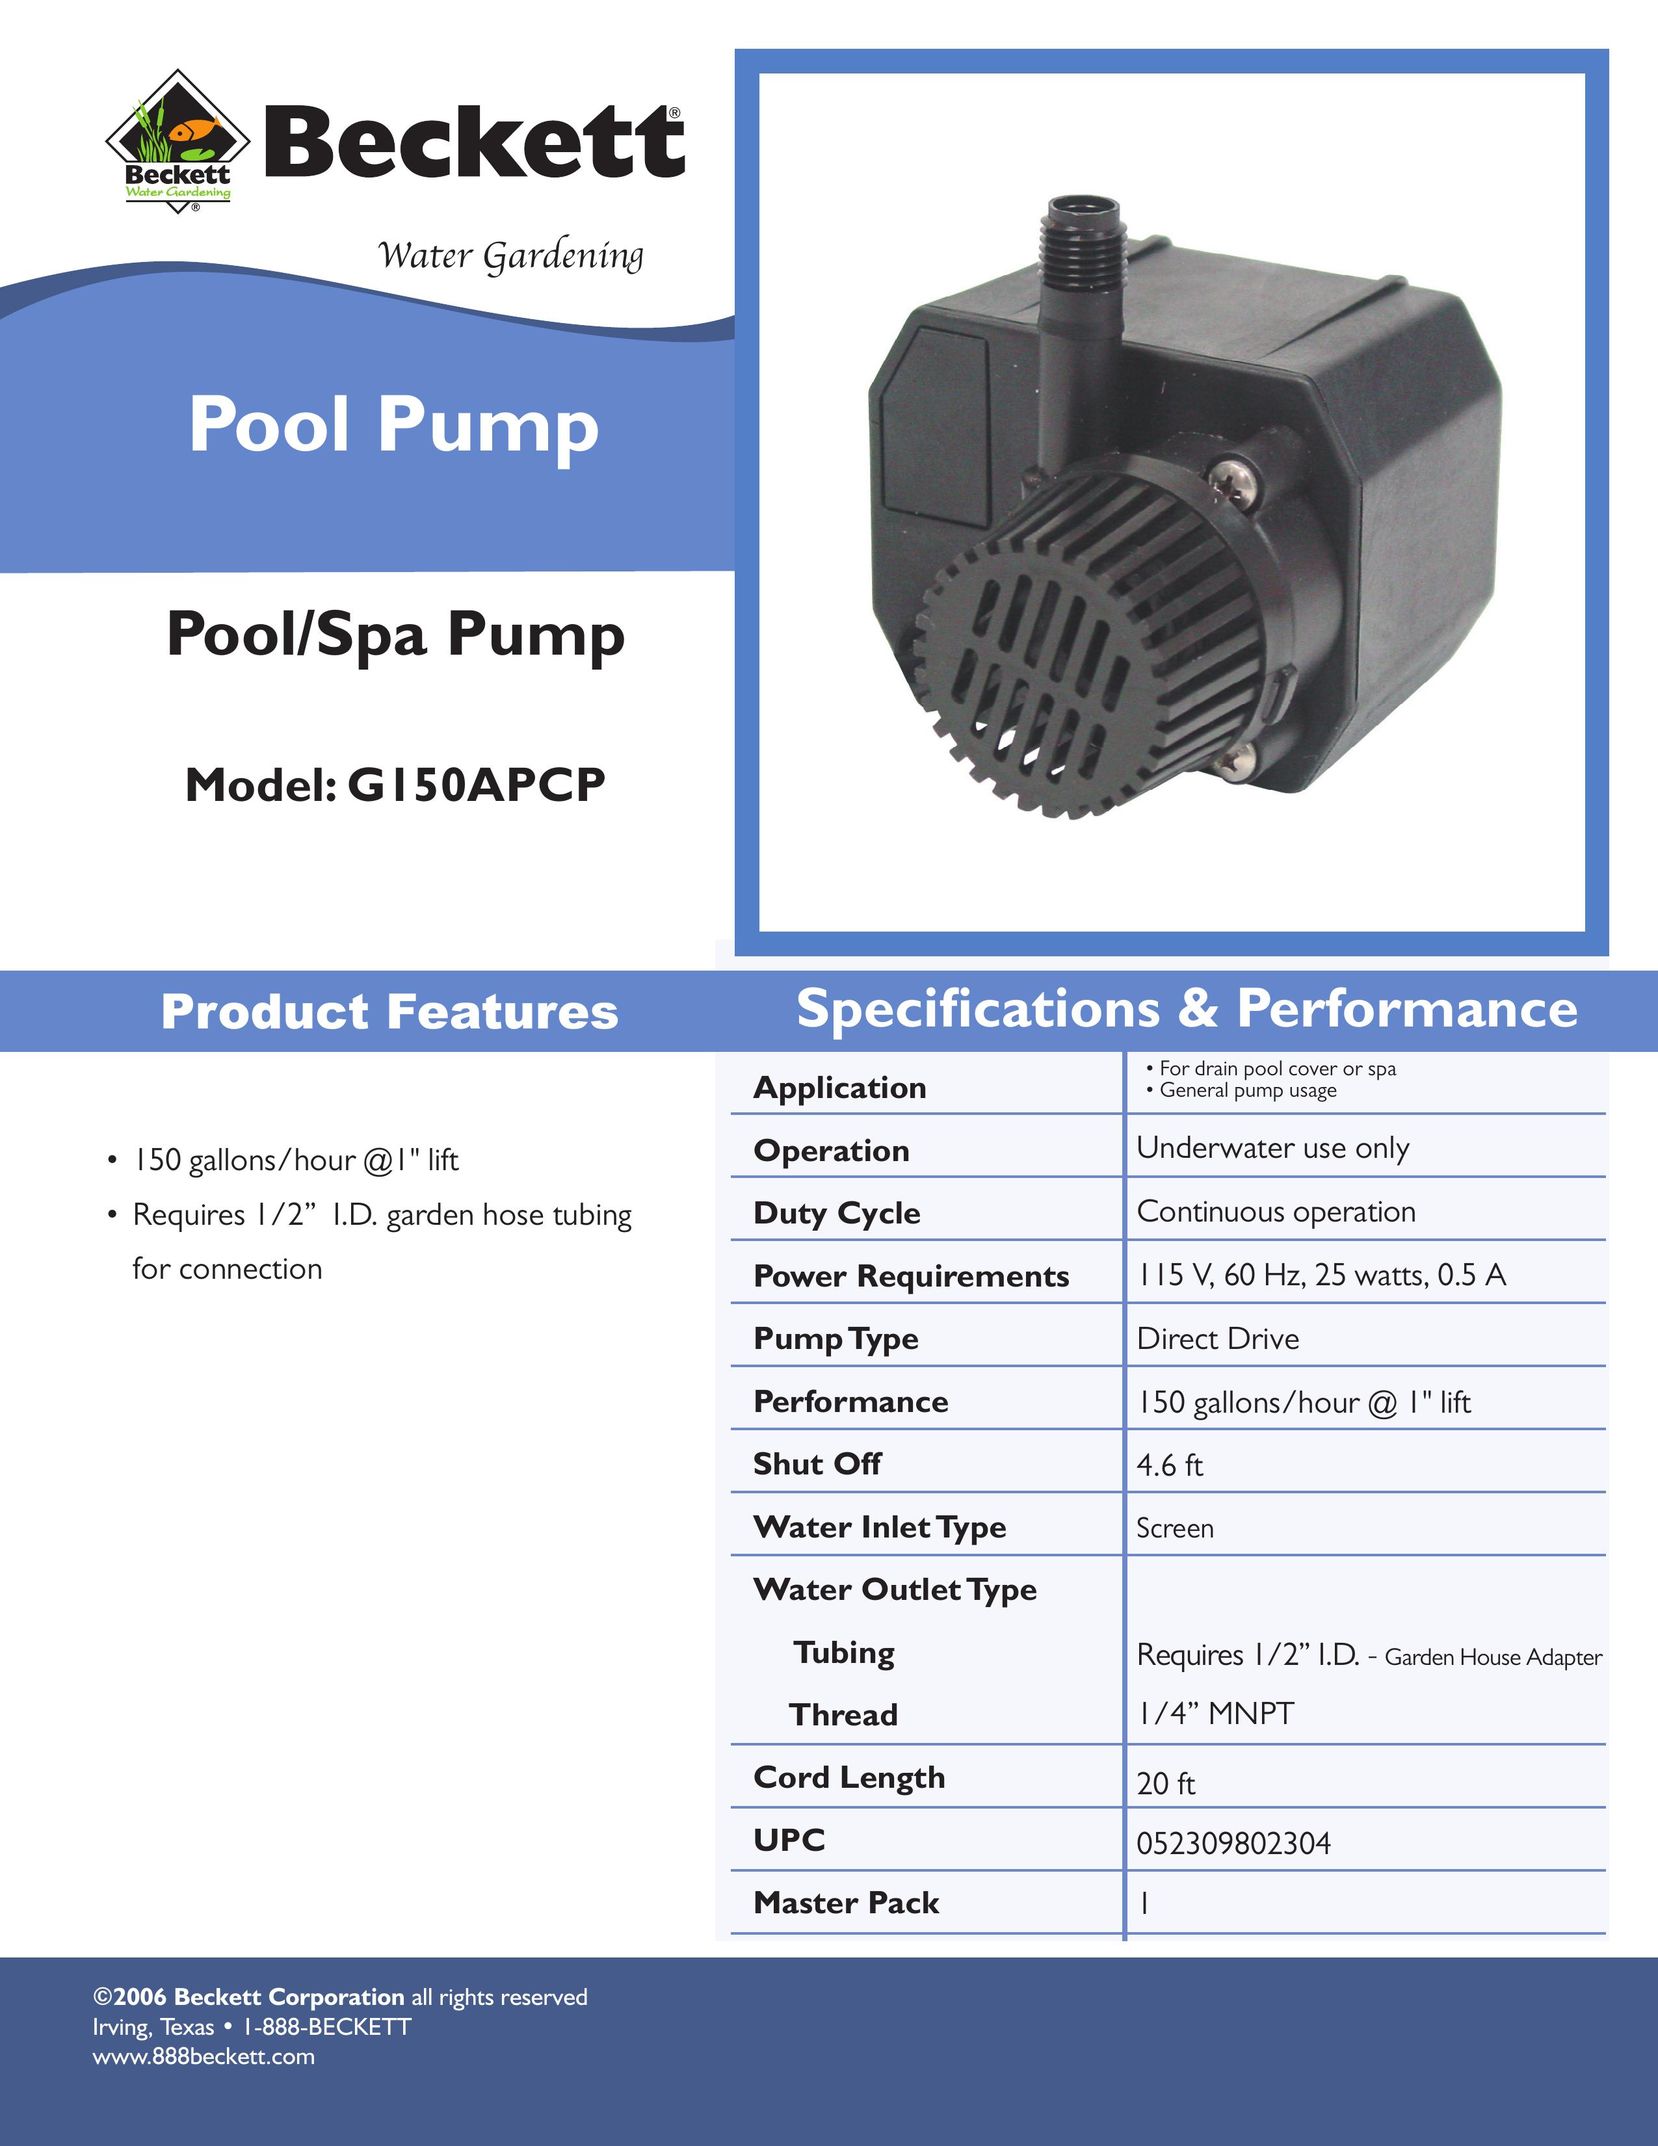 Beckett Water Gardening G150APCP Plumbing Product User Manual